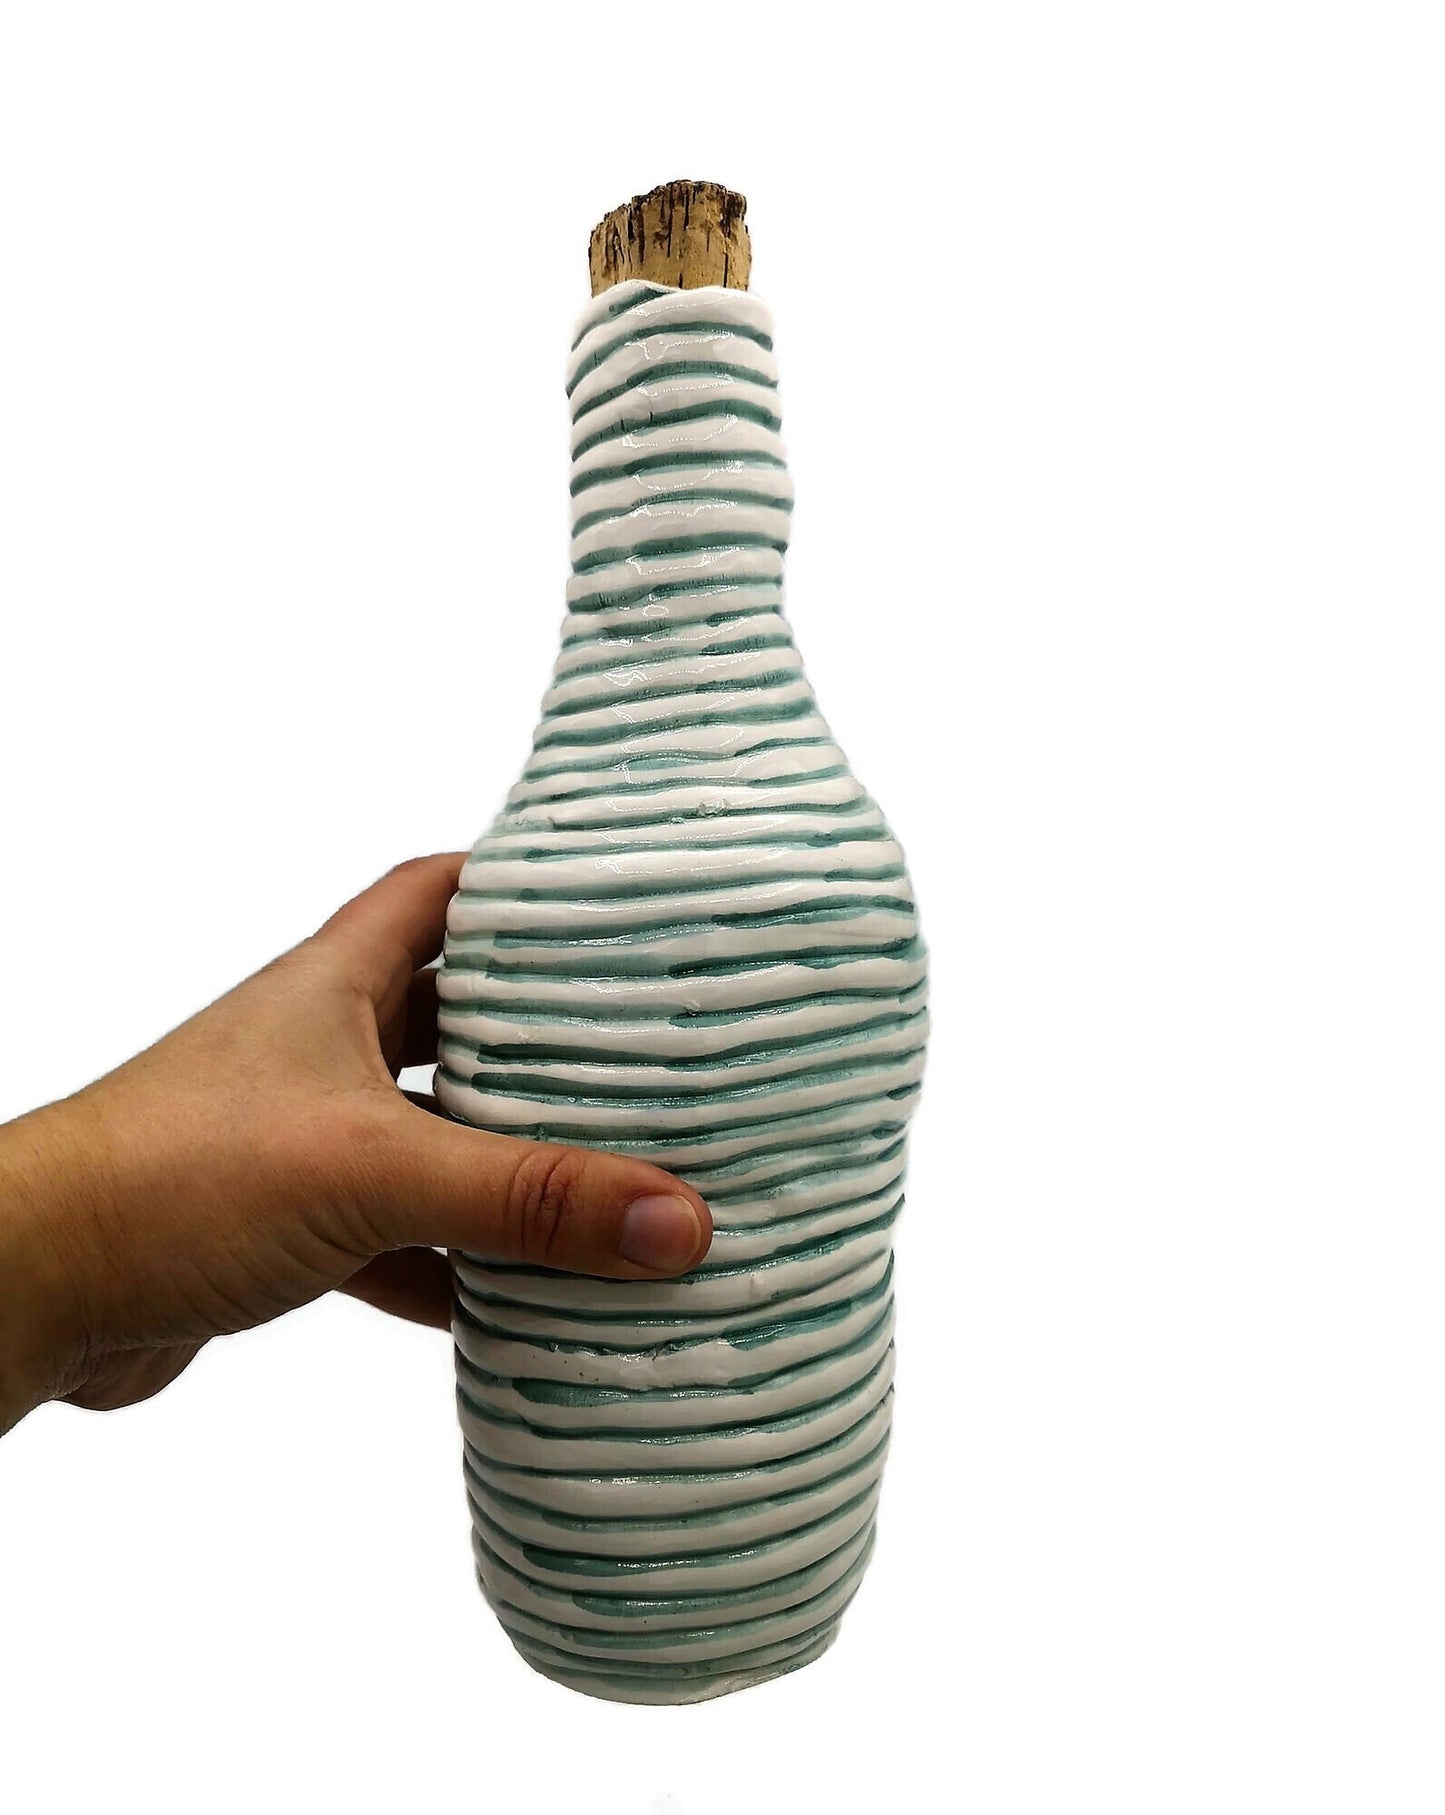 Handmade Ceramic Decorative Bottle With Natural Cork Stopper, White And Green Artisan Portuguese Pottery For Home Decor Unique Textured Vase - Ceramica Ana Rafael